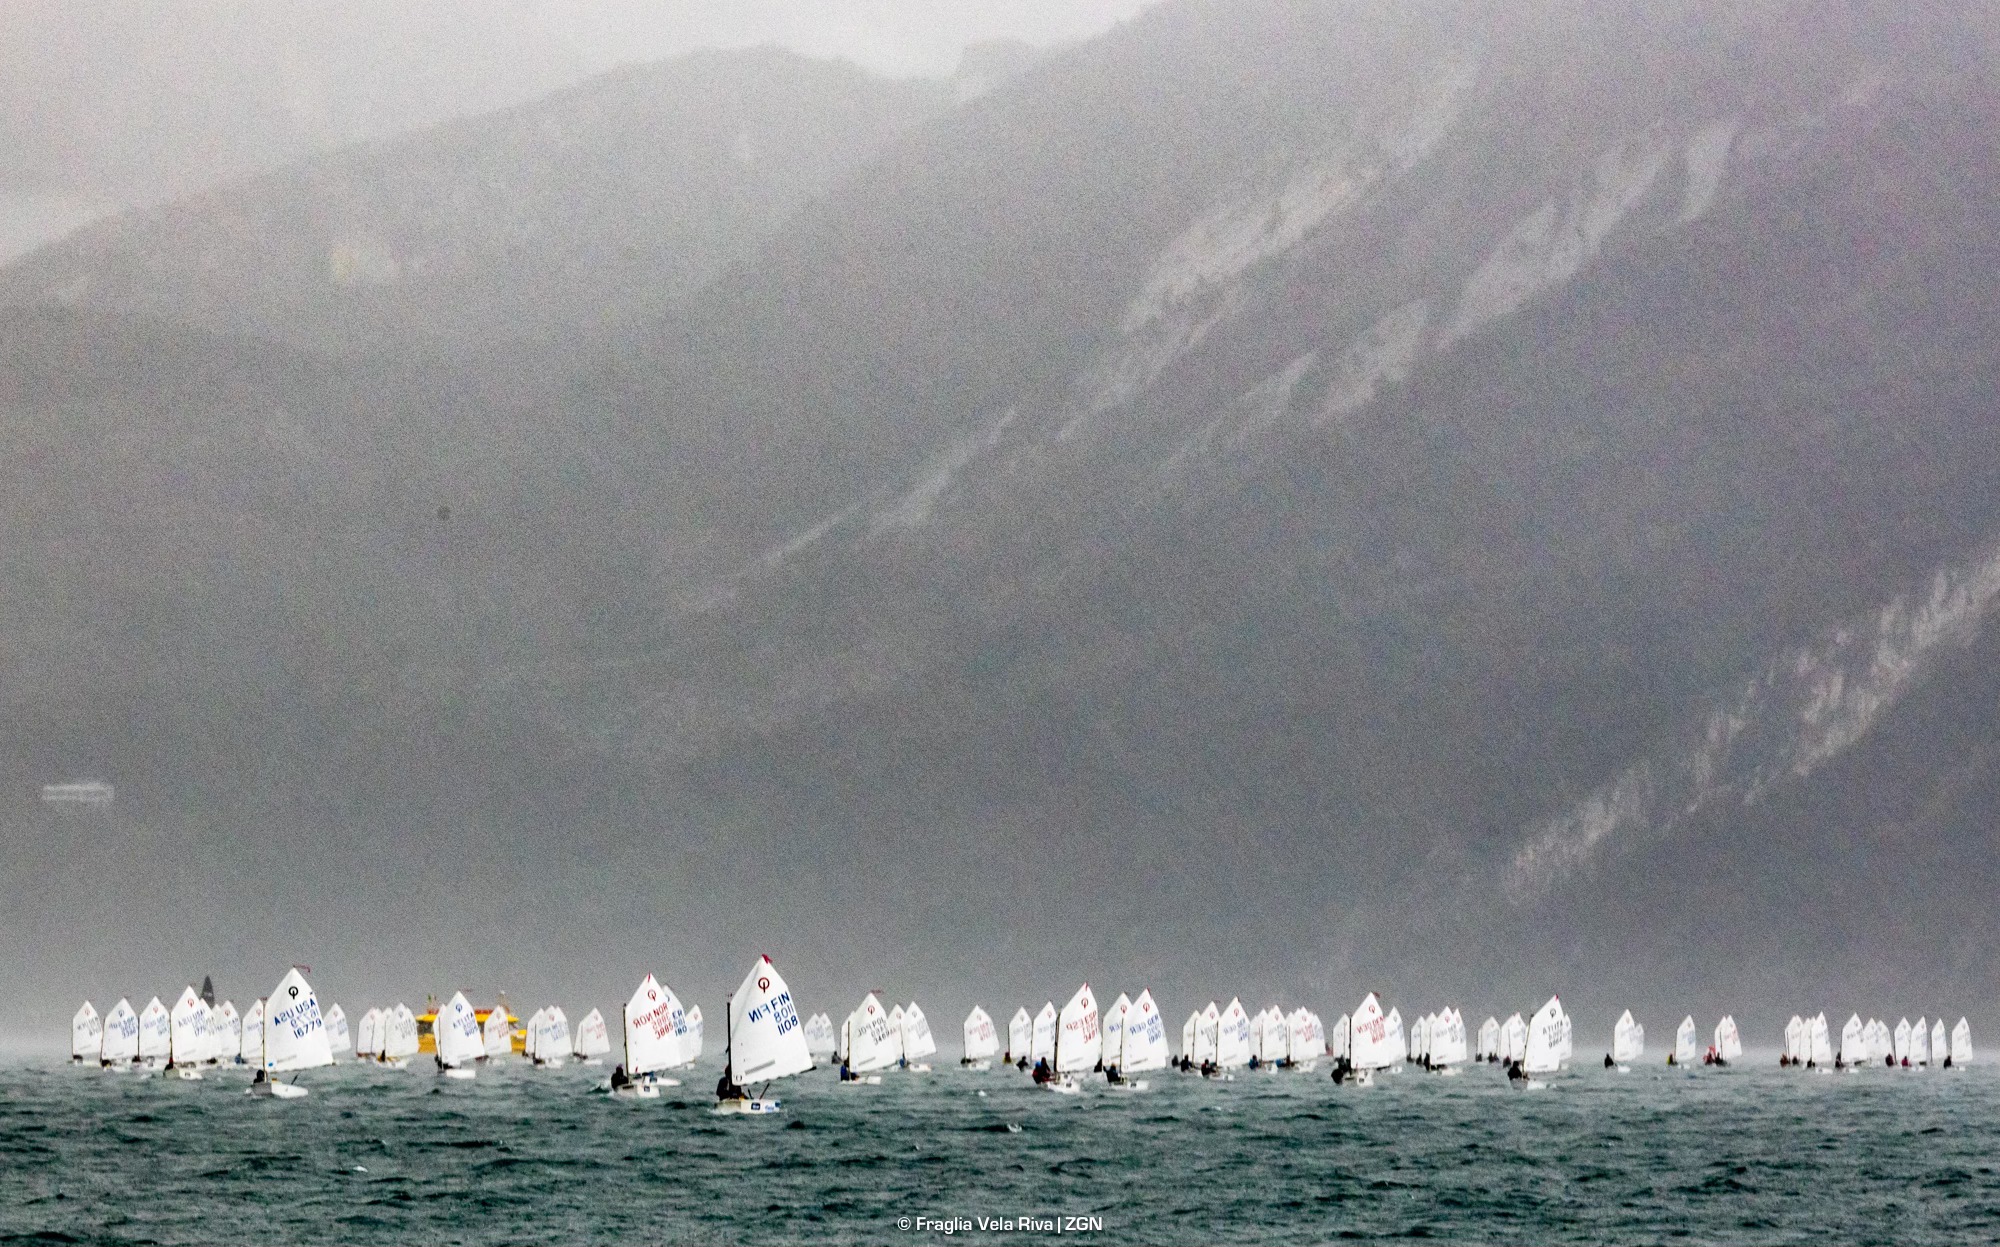  Optimist  Lake Garda Meeting  Riva ITA  Final results